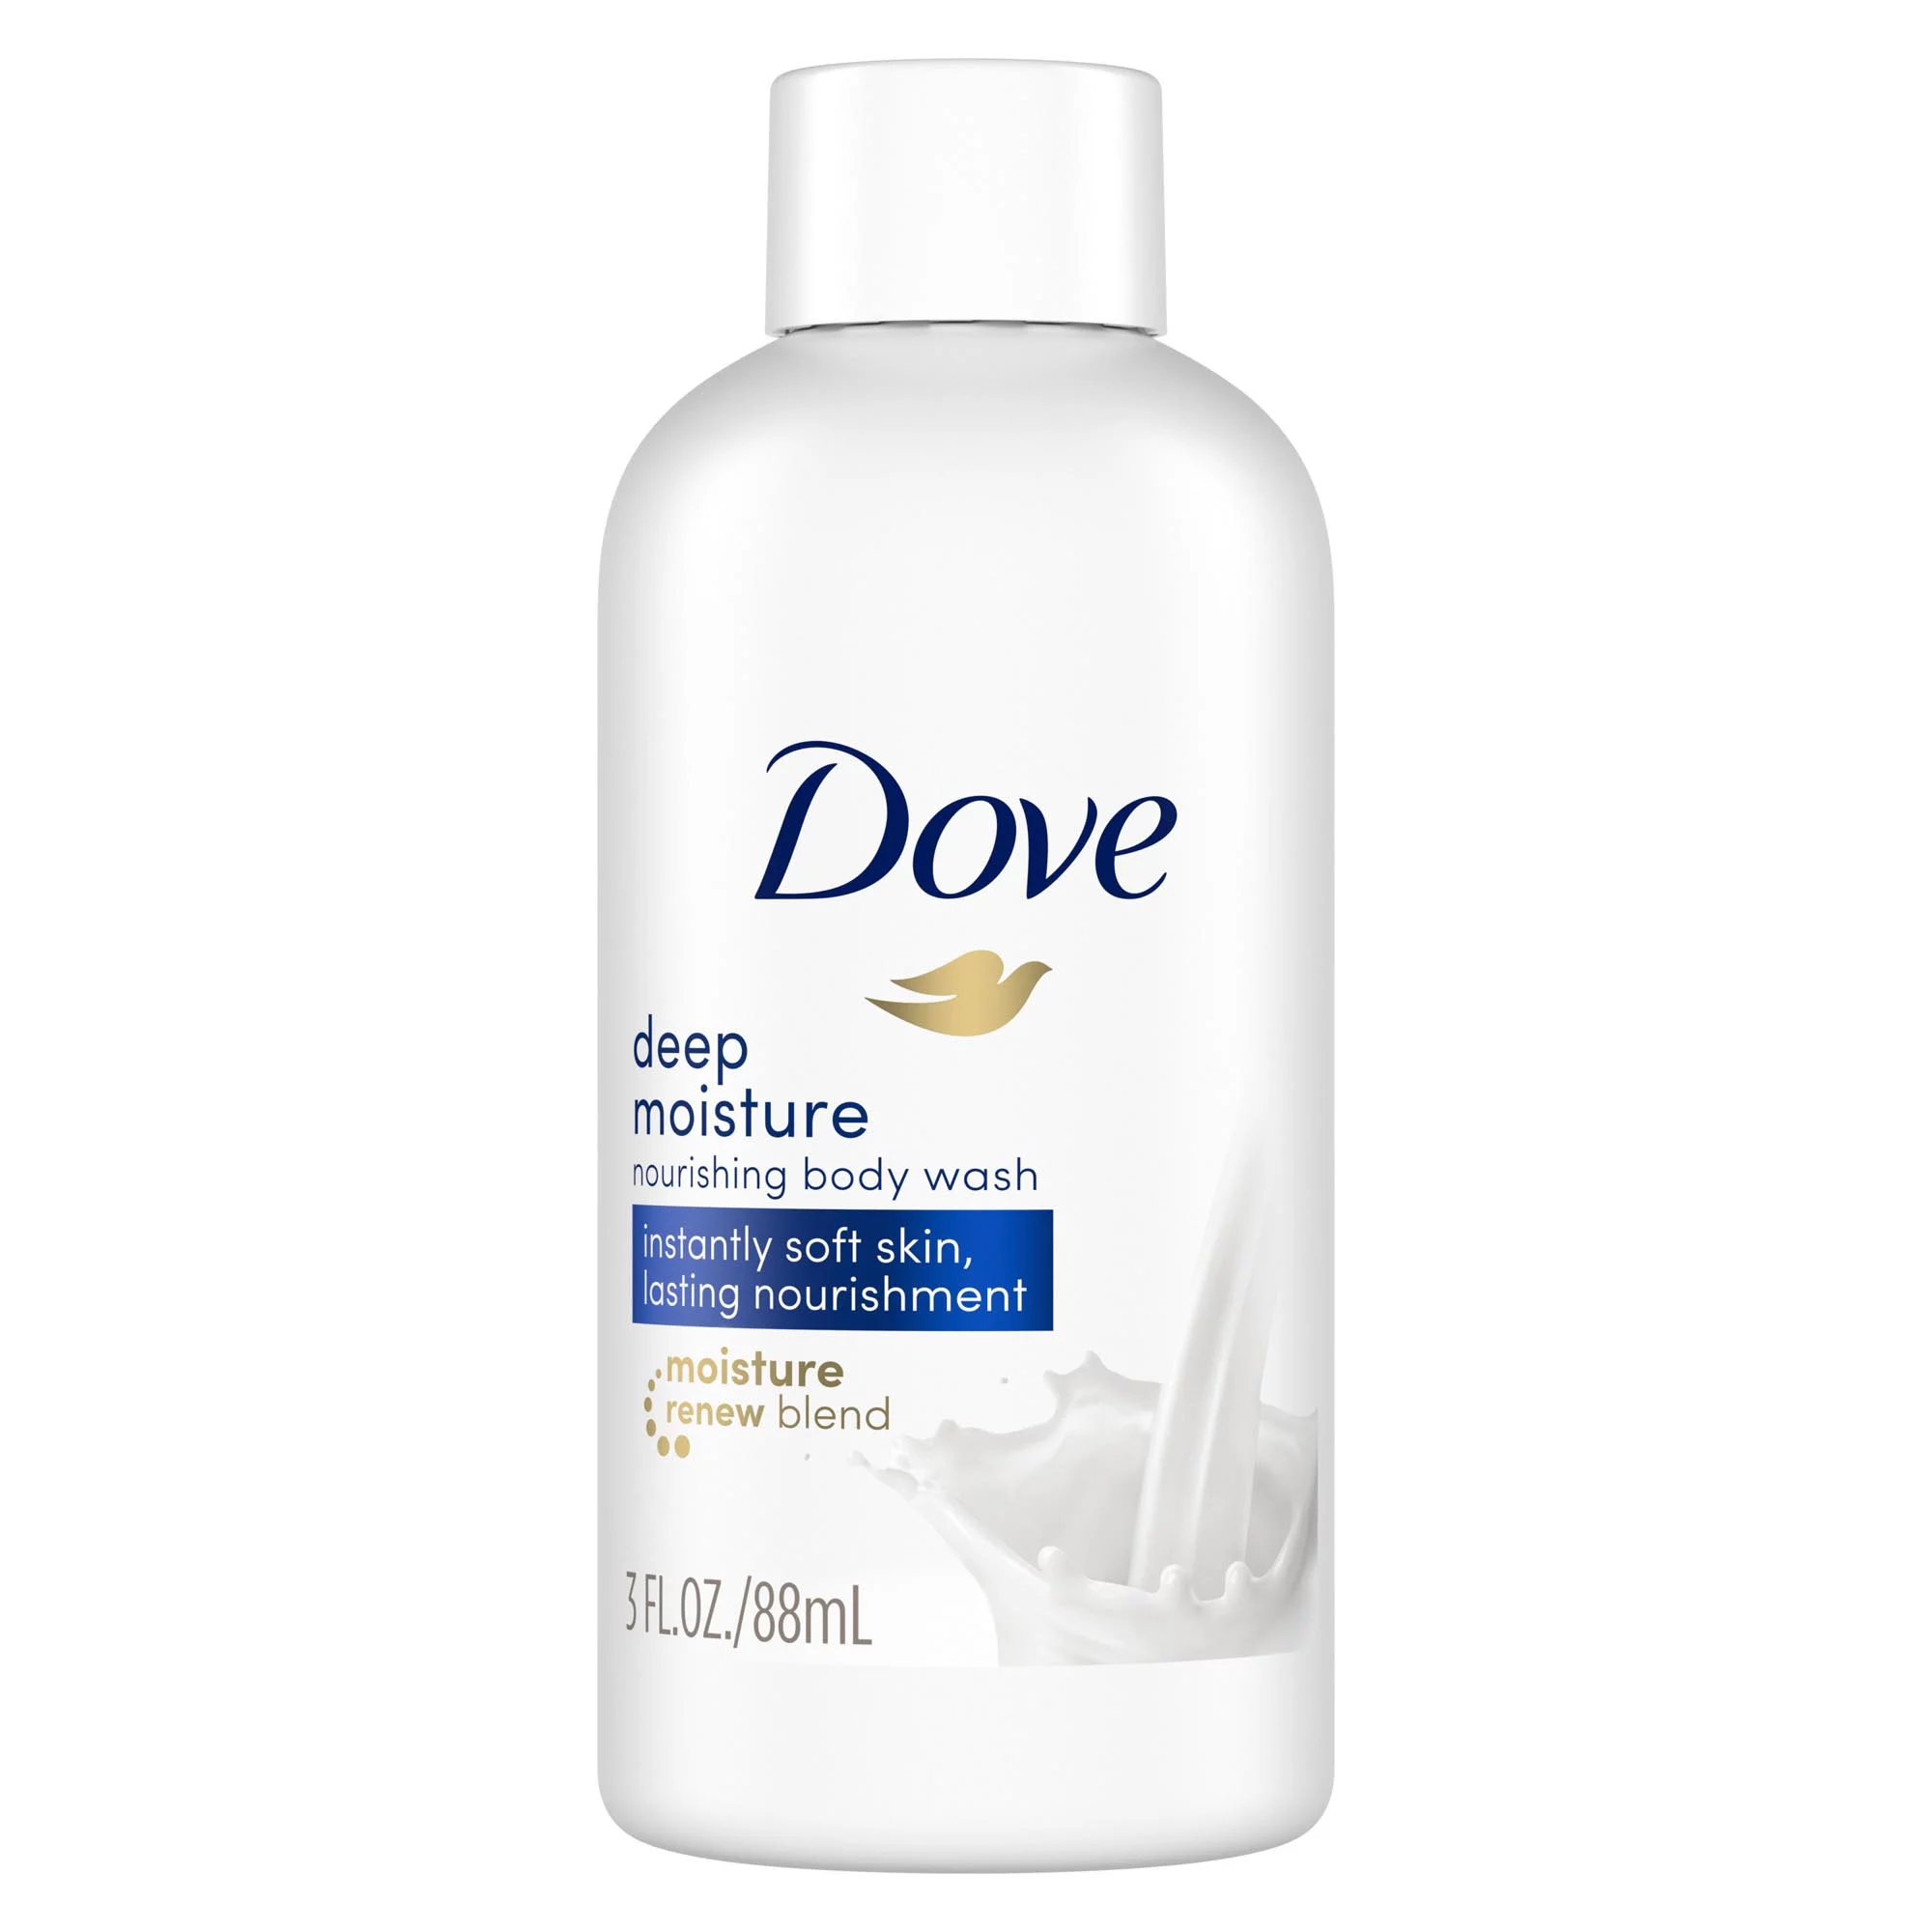 Dove deep moisture body wash 3oz